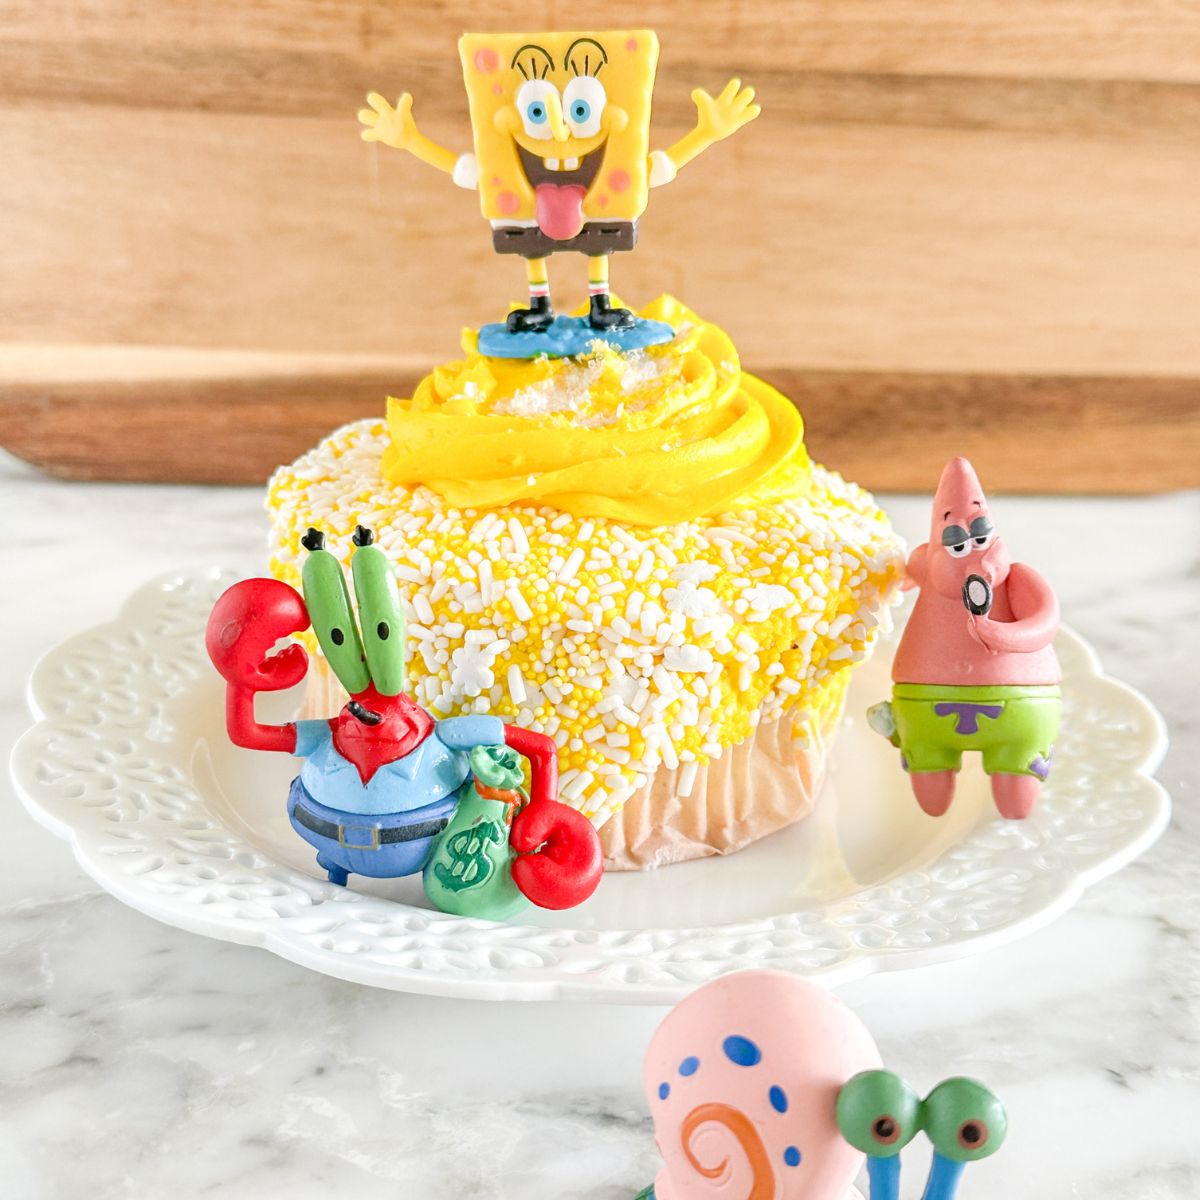 Spongebob SquarePants Cake. Square One Homemade Treats